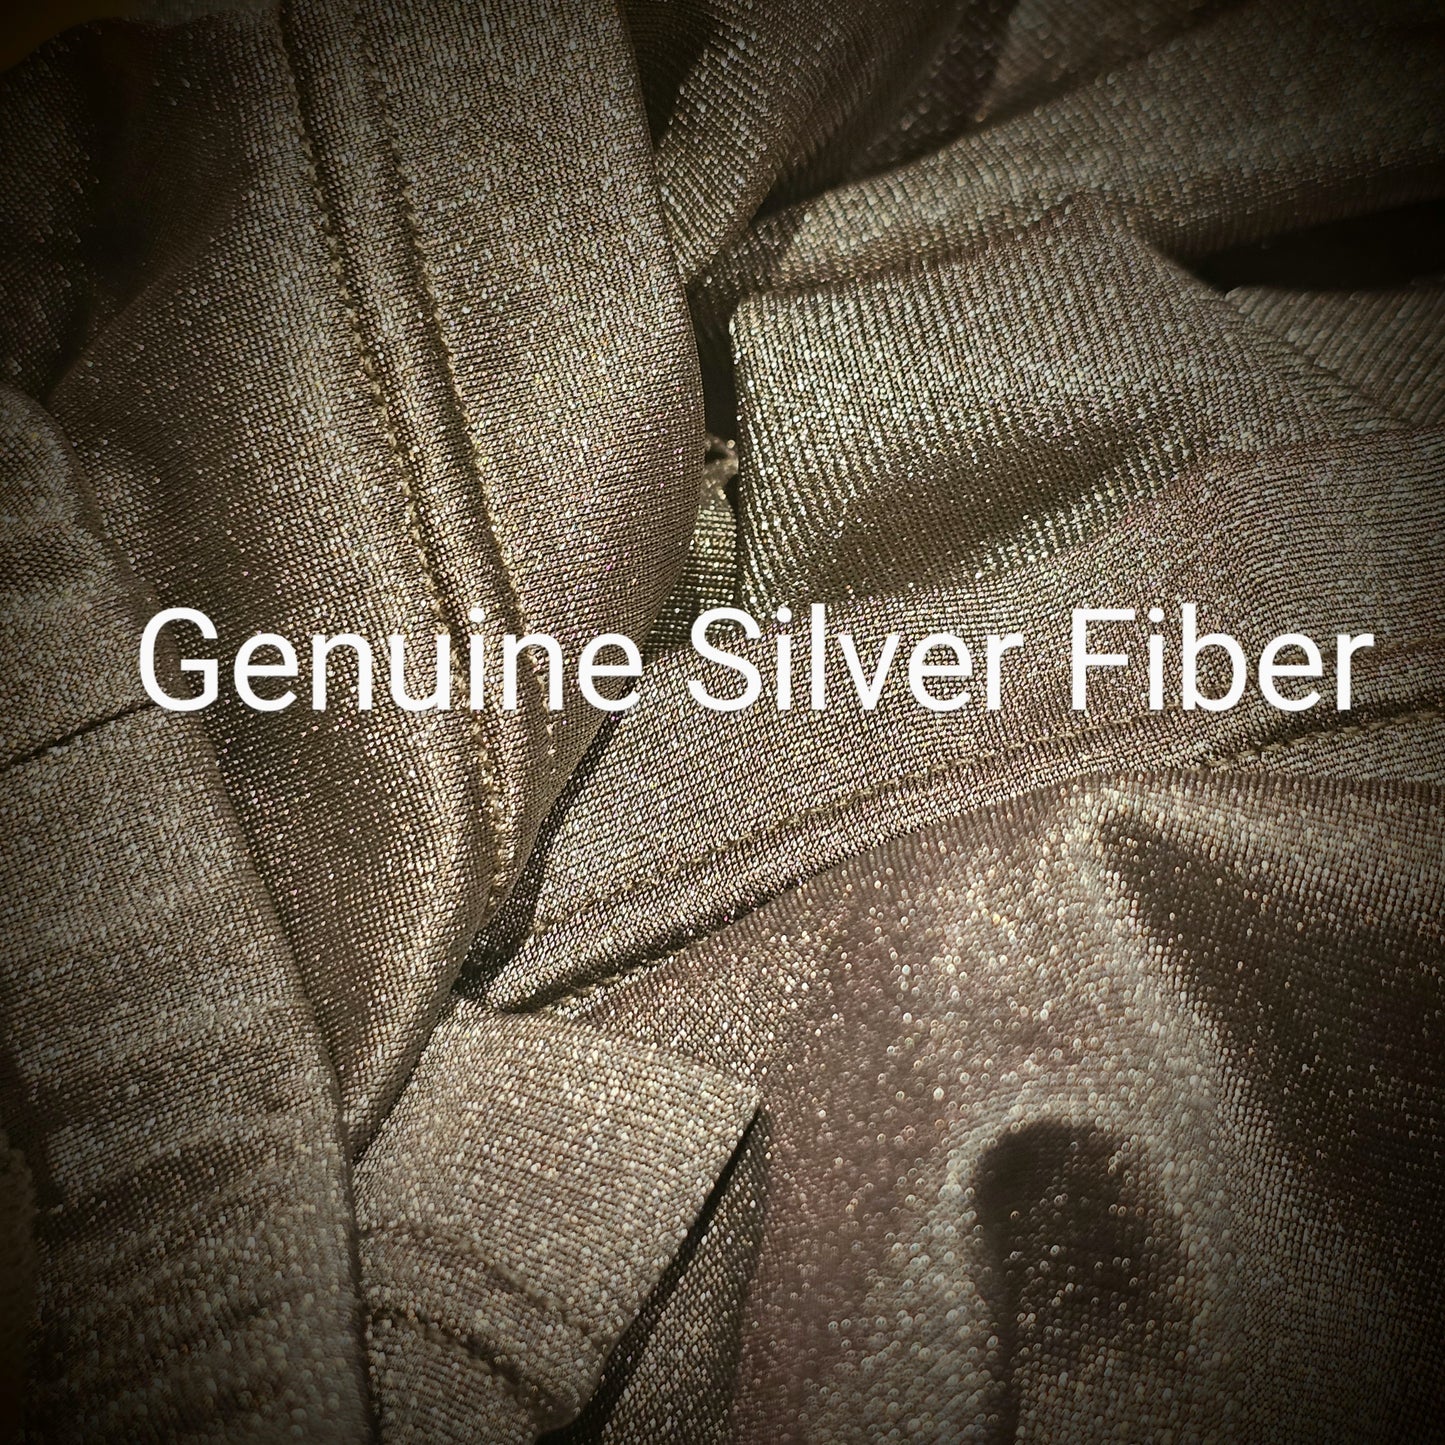 EMF Guardian™ - Fertility Shield. Silver Fiber Lined Fabric